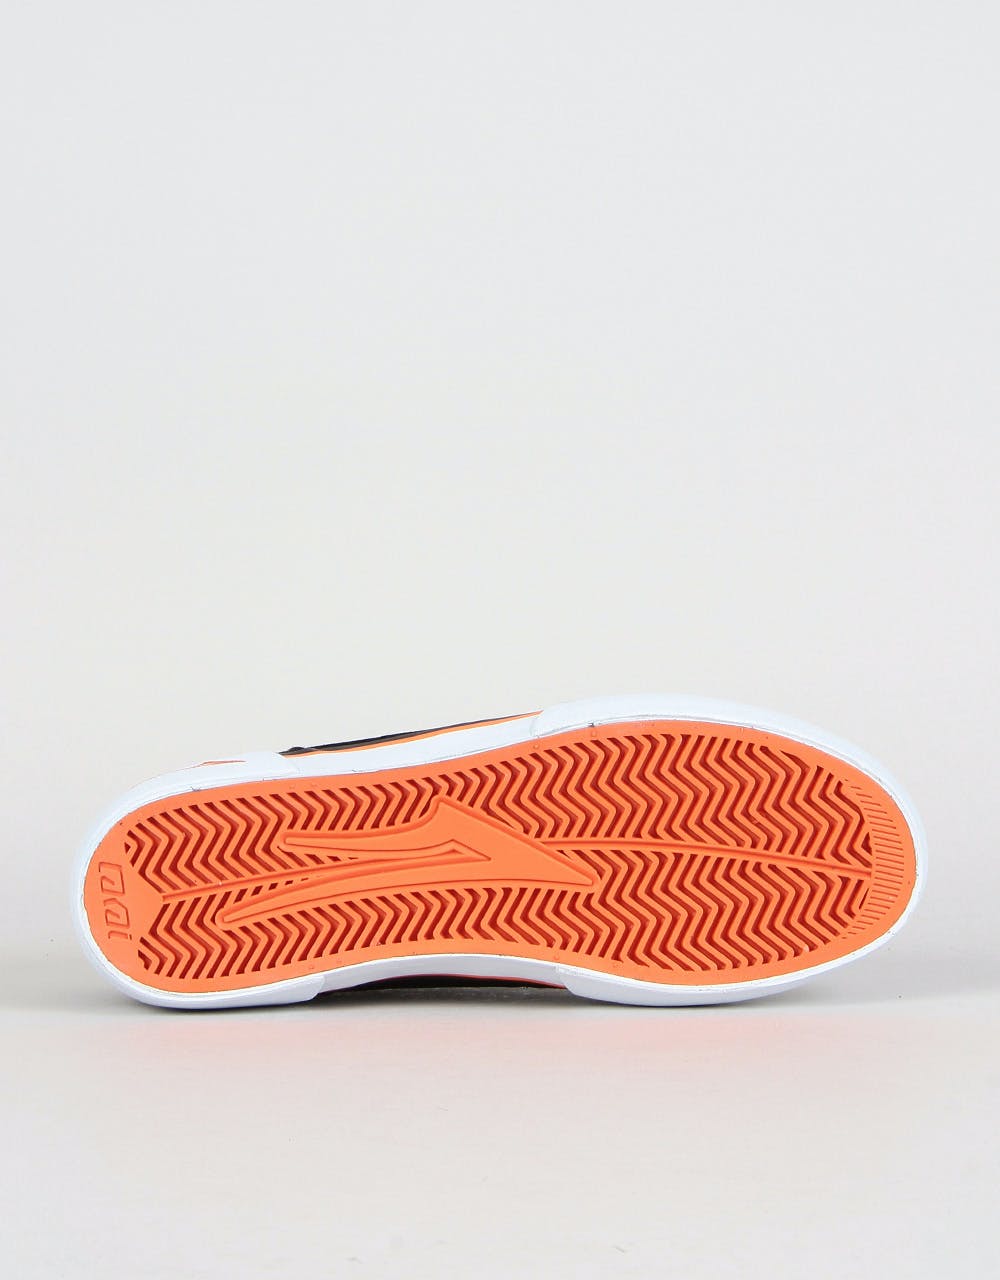 Lakai Staple Skate Shoes - Black/Orange Suede